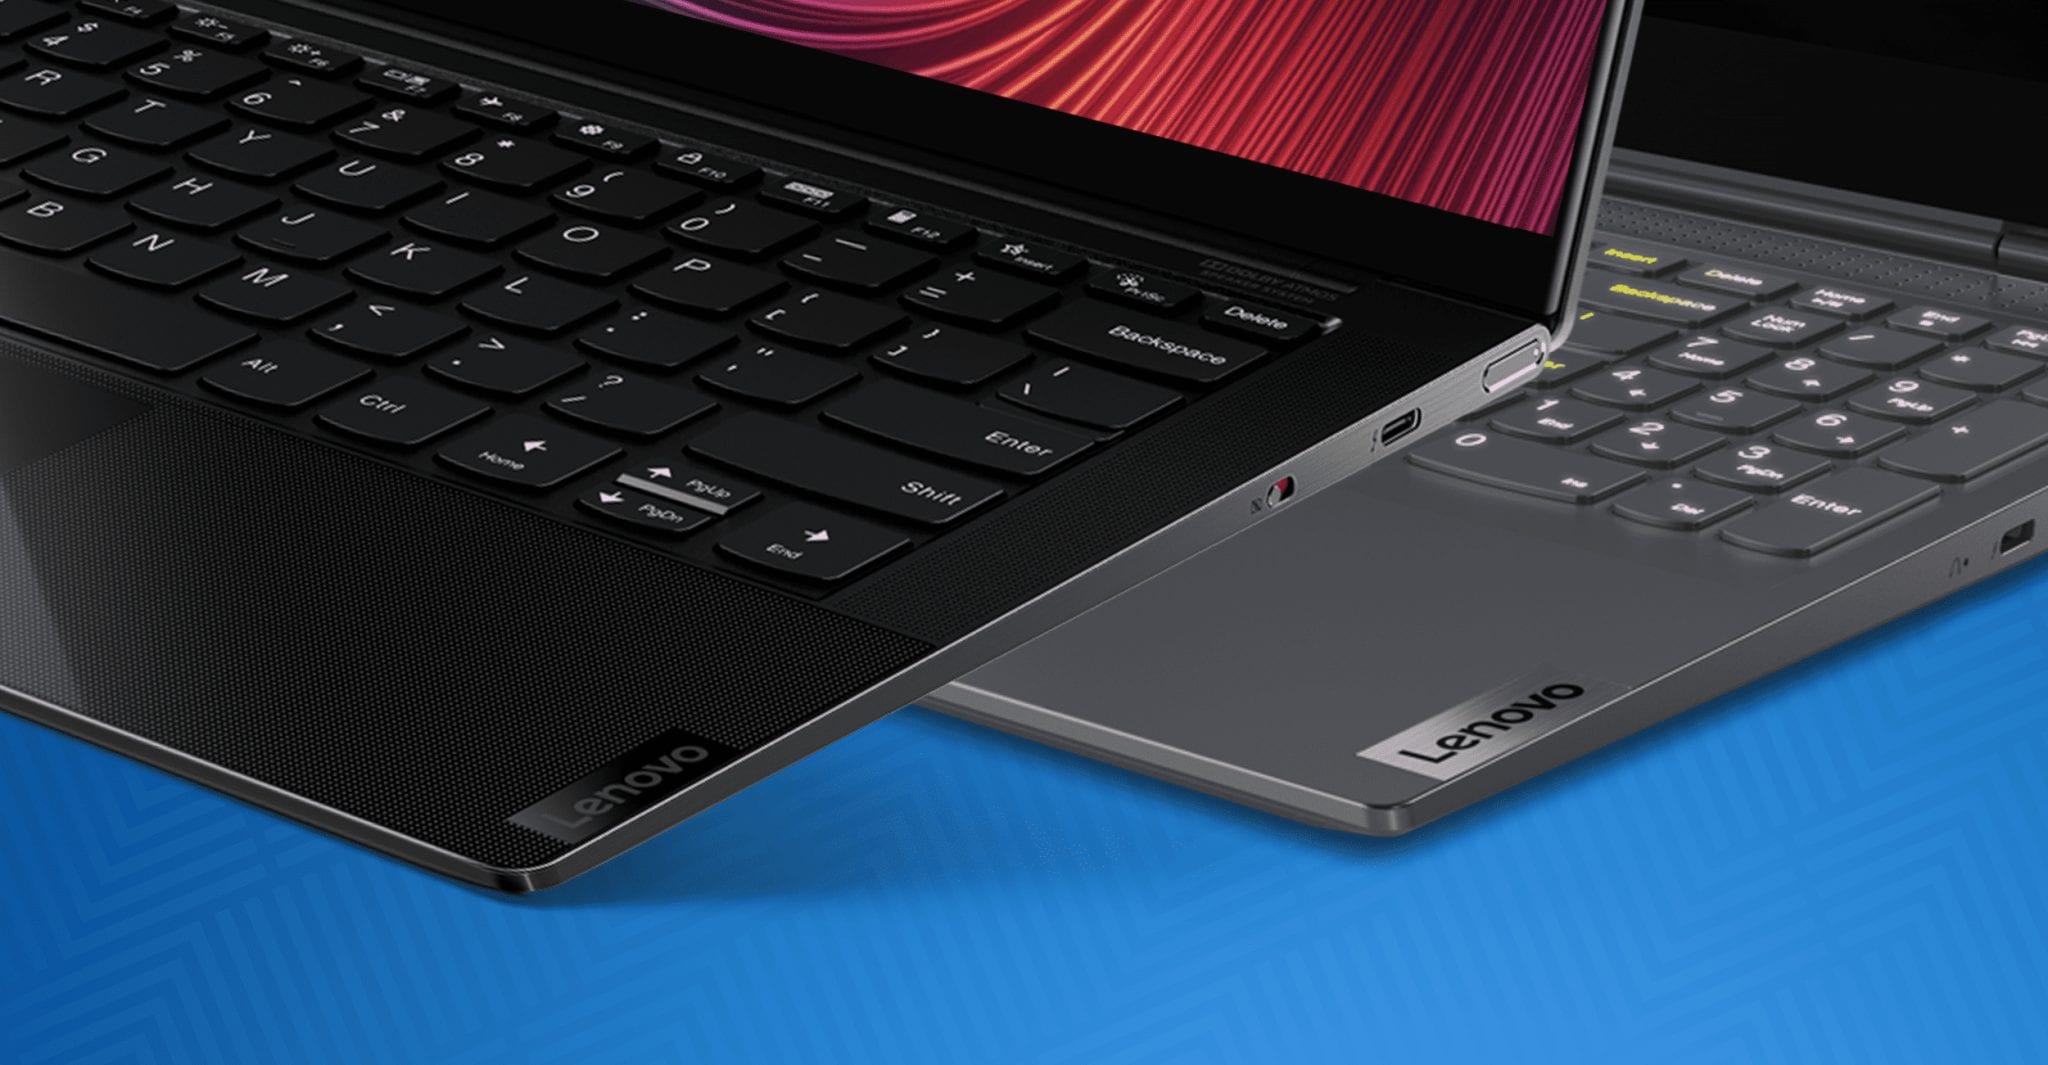 The Latest Lenovo Yoga Laptops Feature New Intel 11th Gen Core Mobile